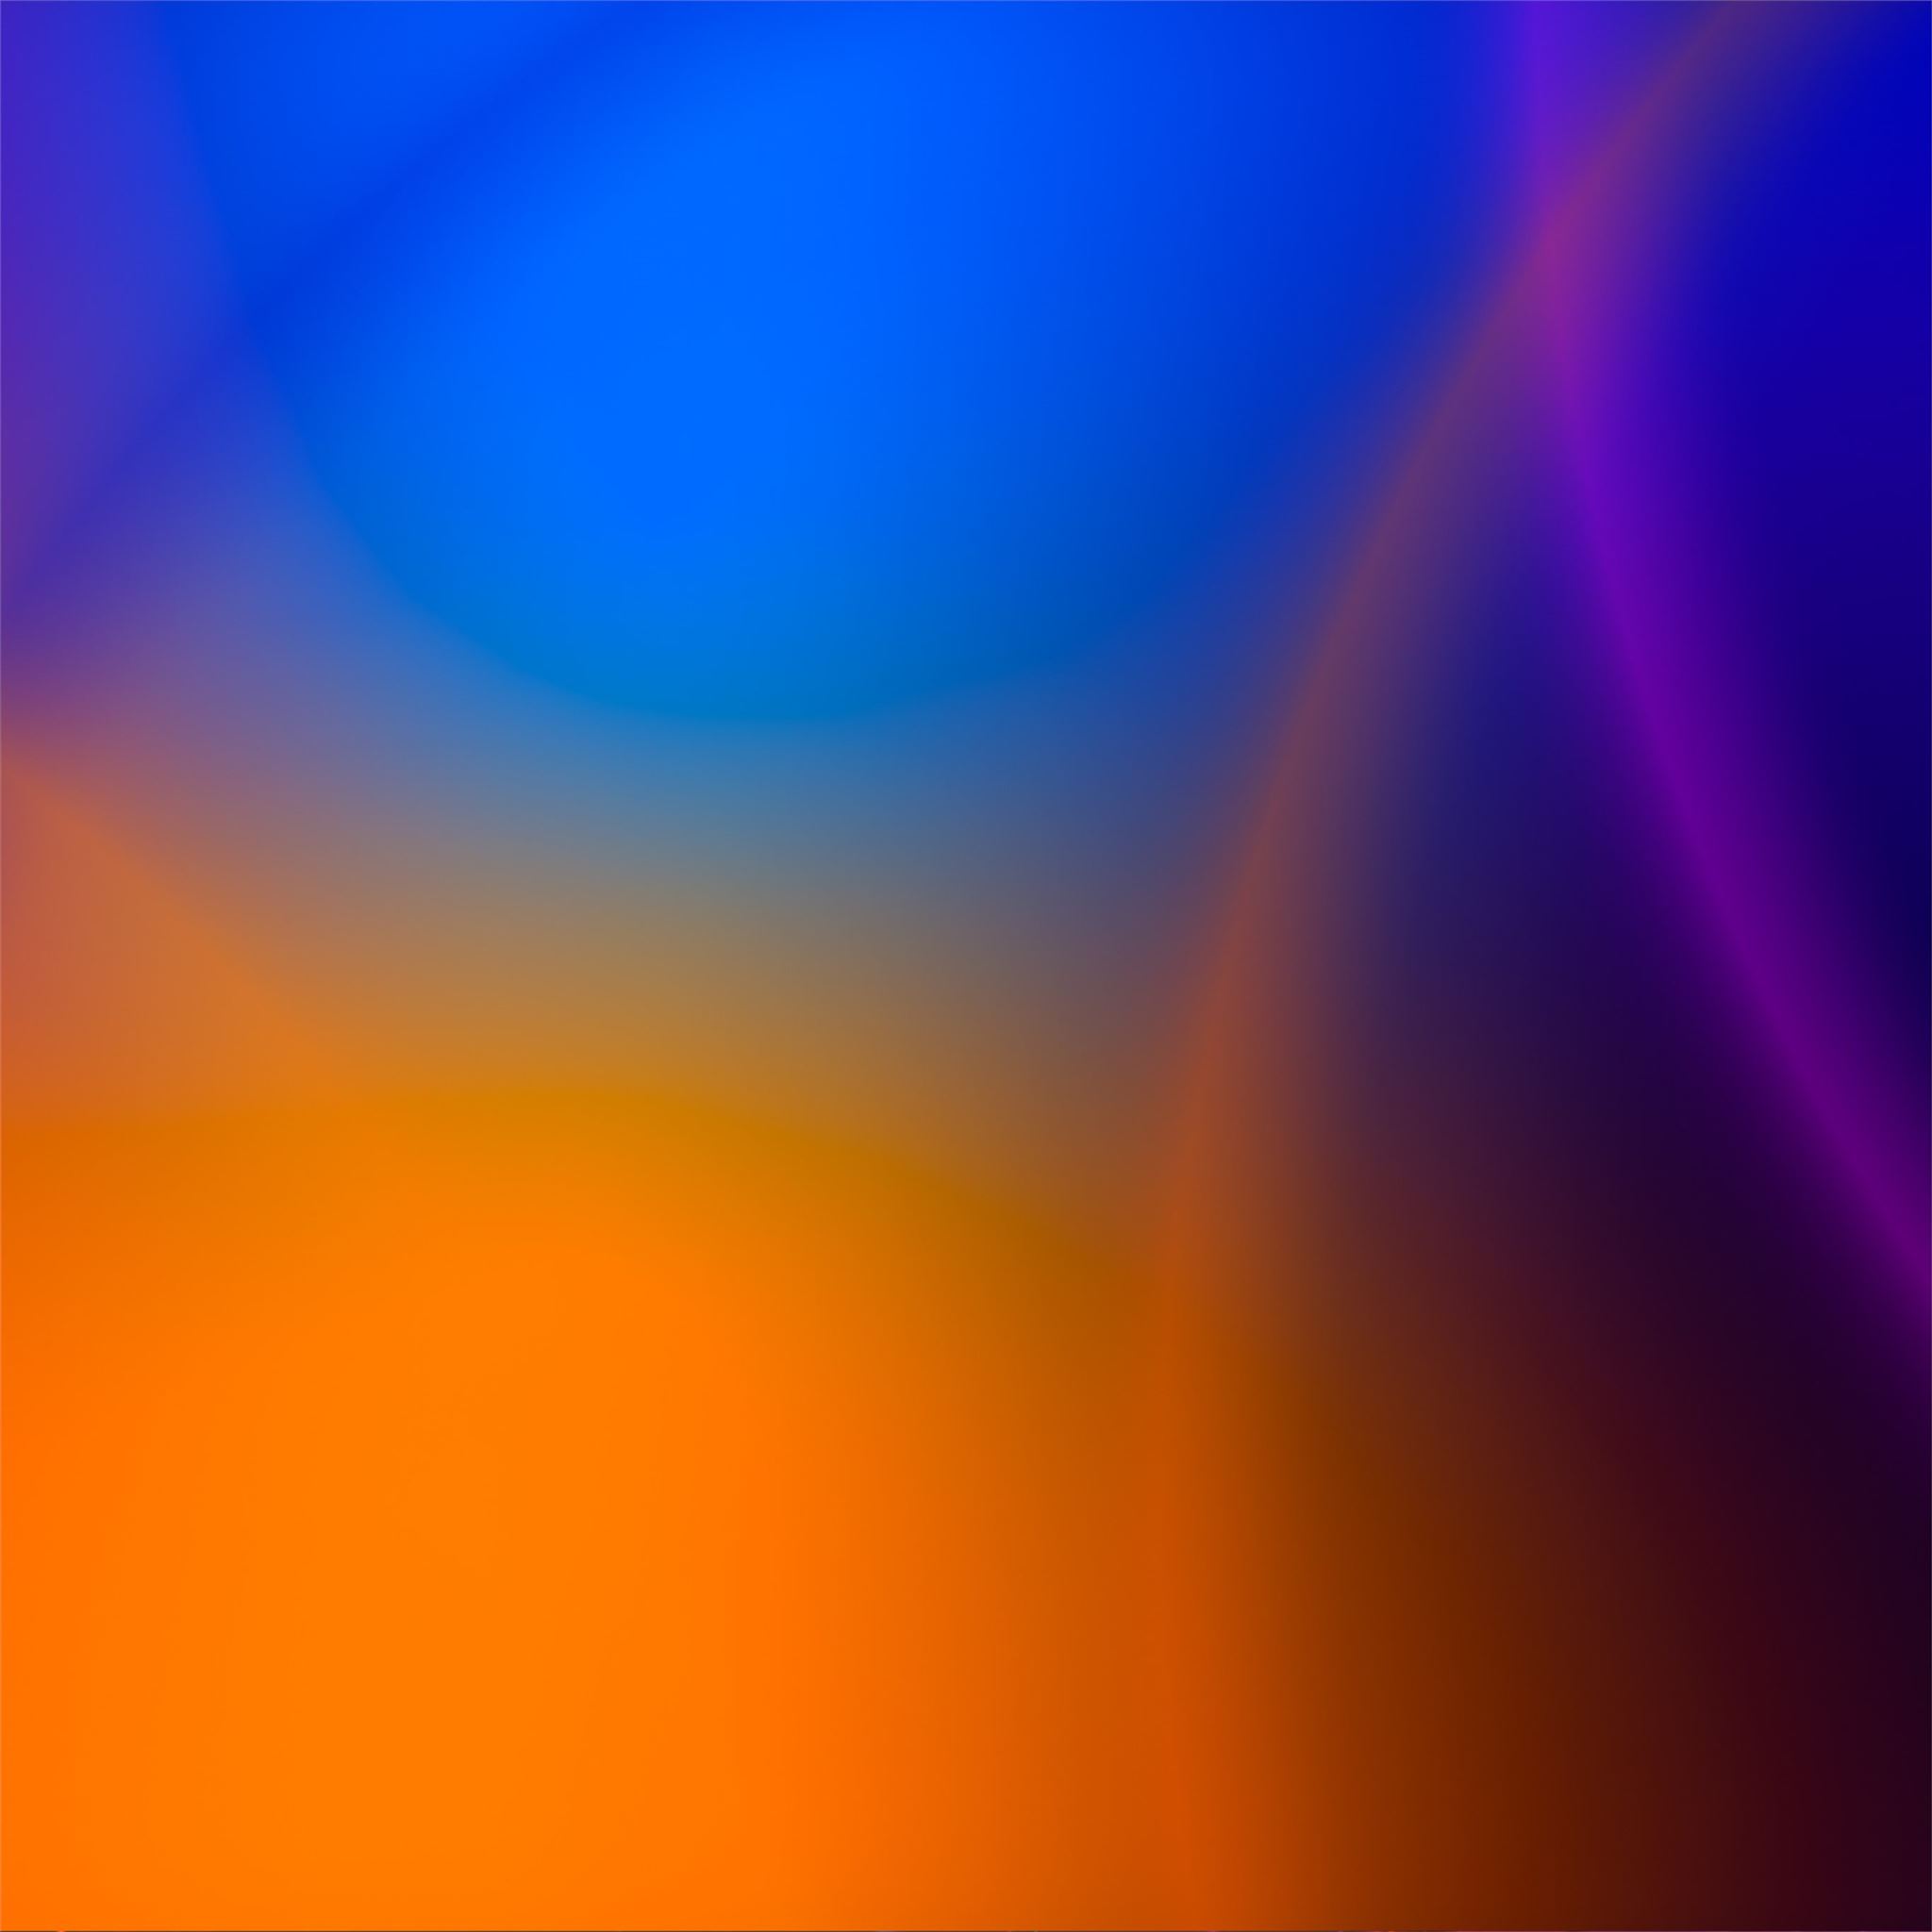 Blur Abstract Art 4k Ipad Air Wallpapers Free Download